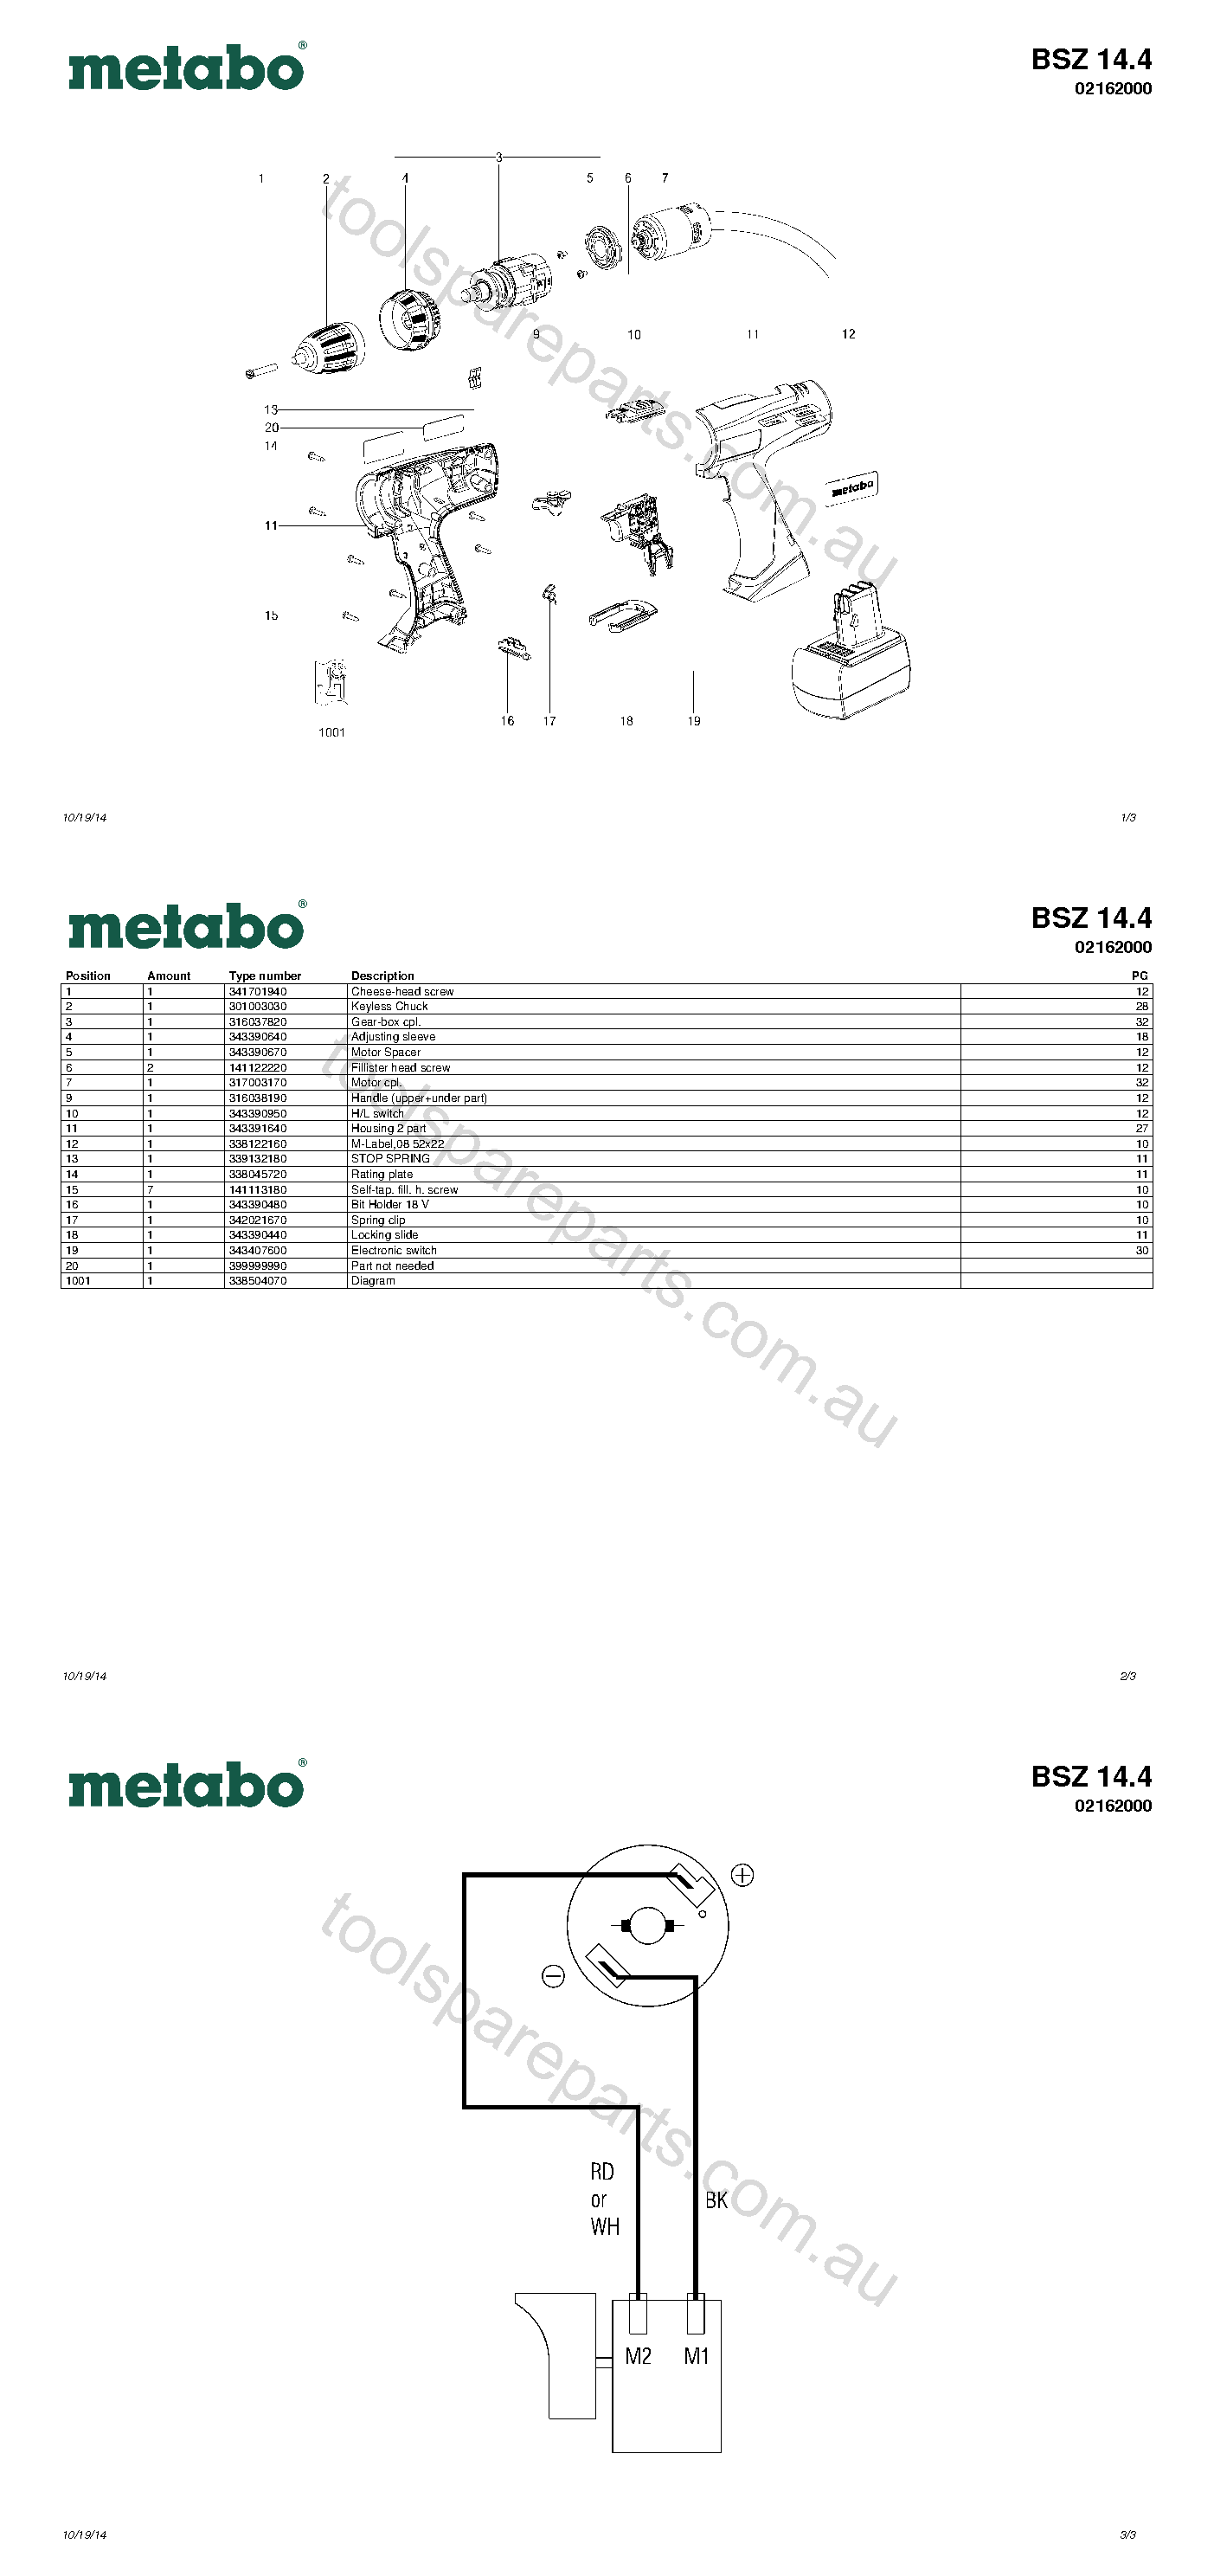 Metabo BSZ 14.4 02162000  Diagram 1